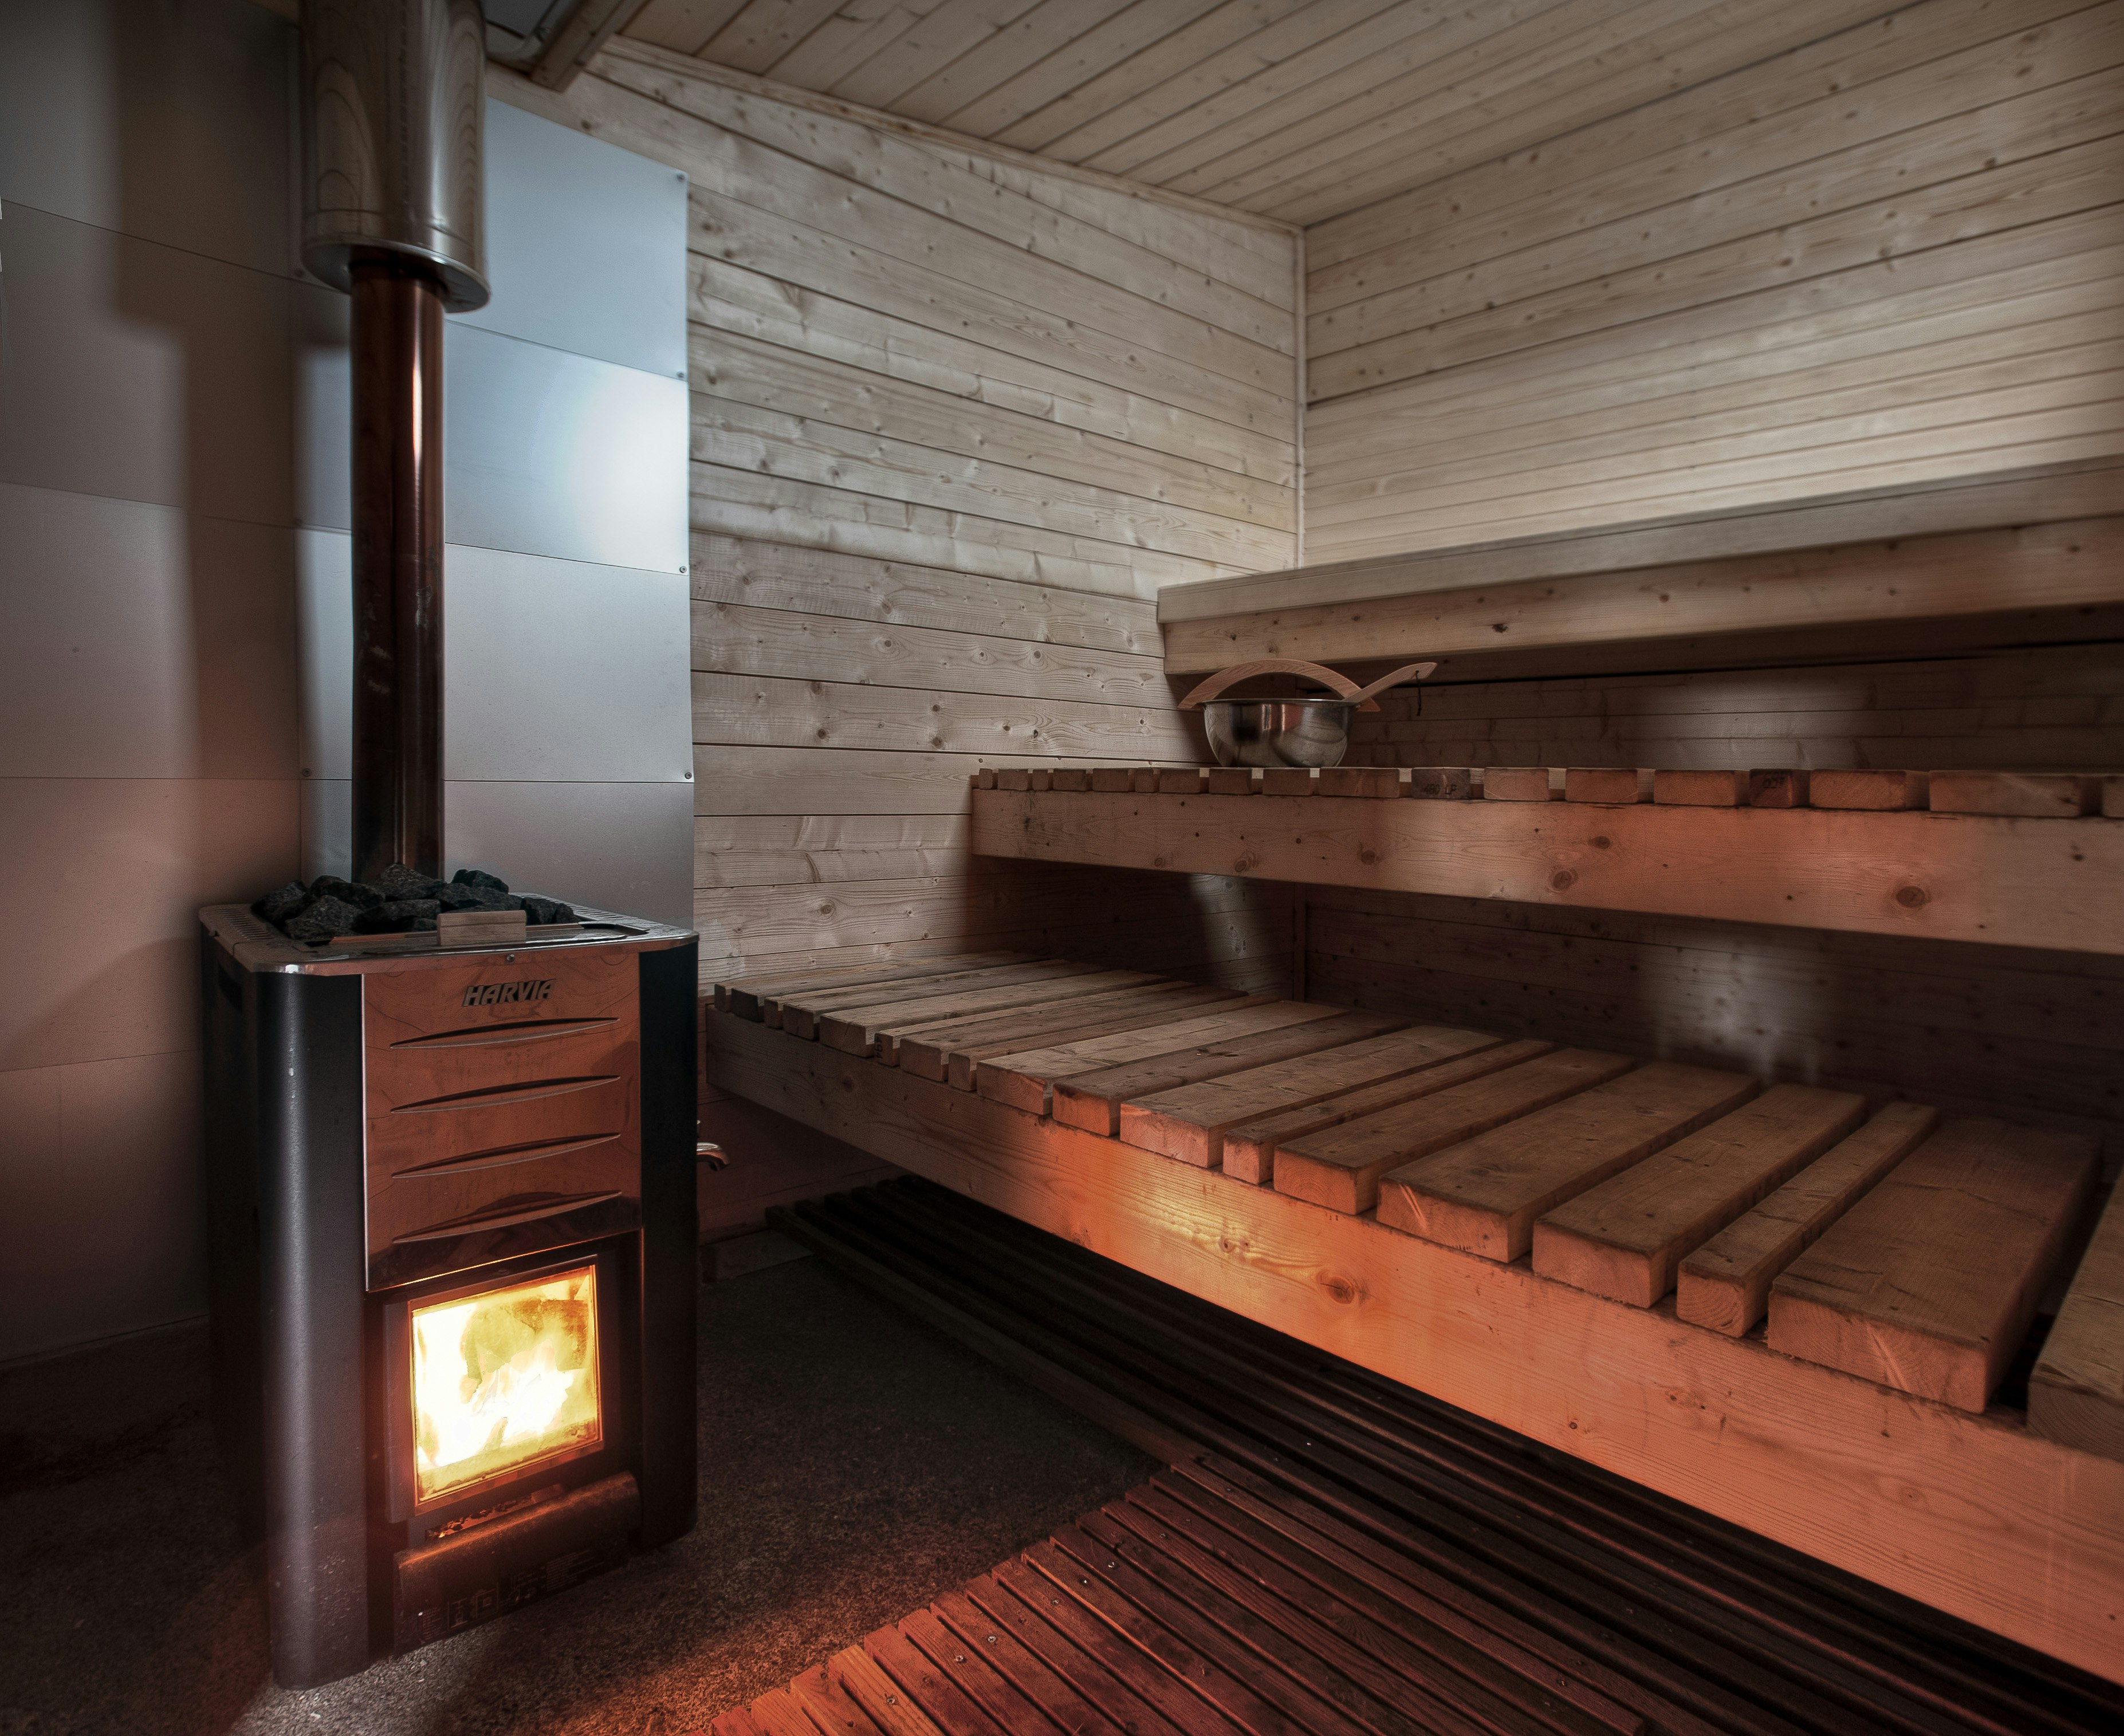 Guests take turns at lighting the sauna room stove